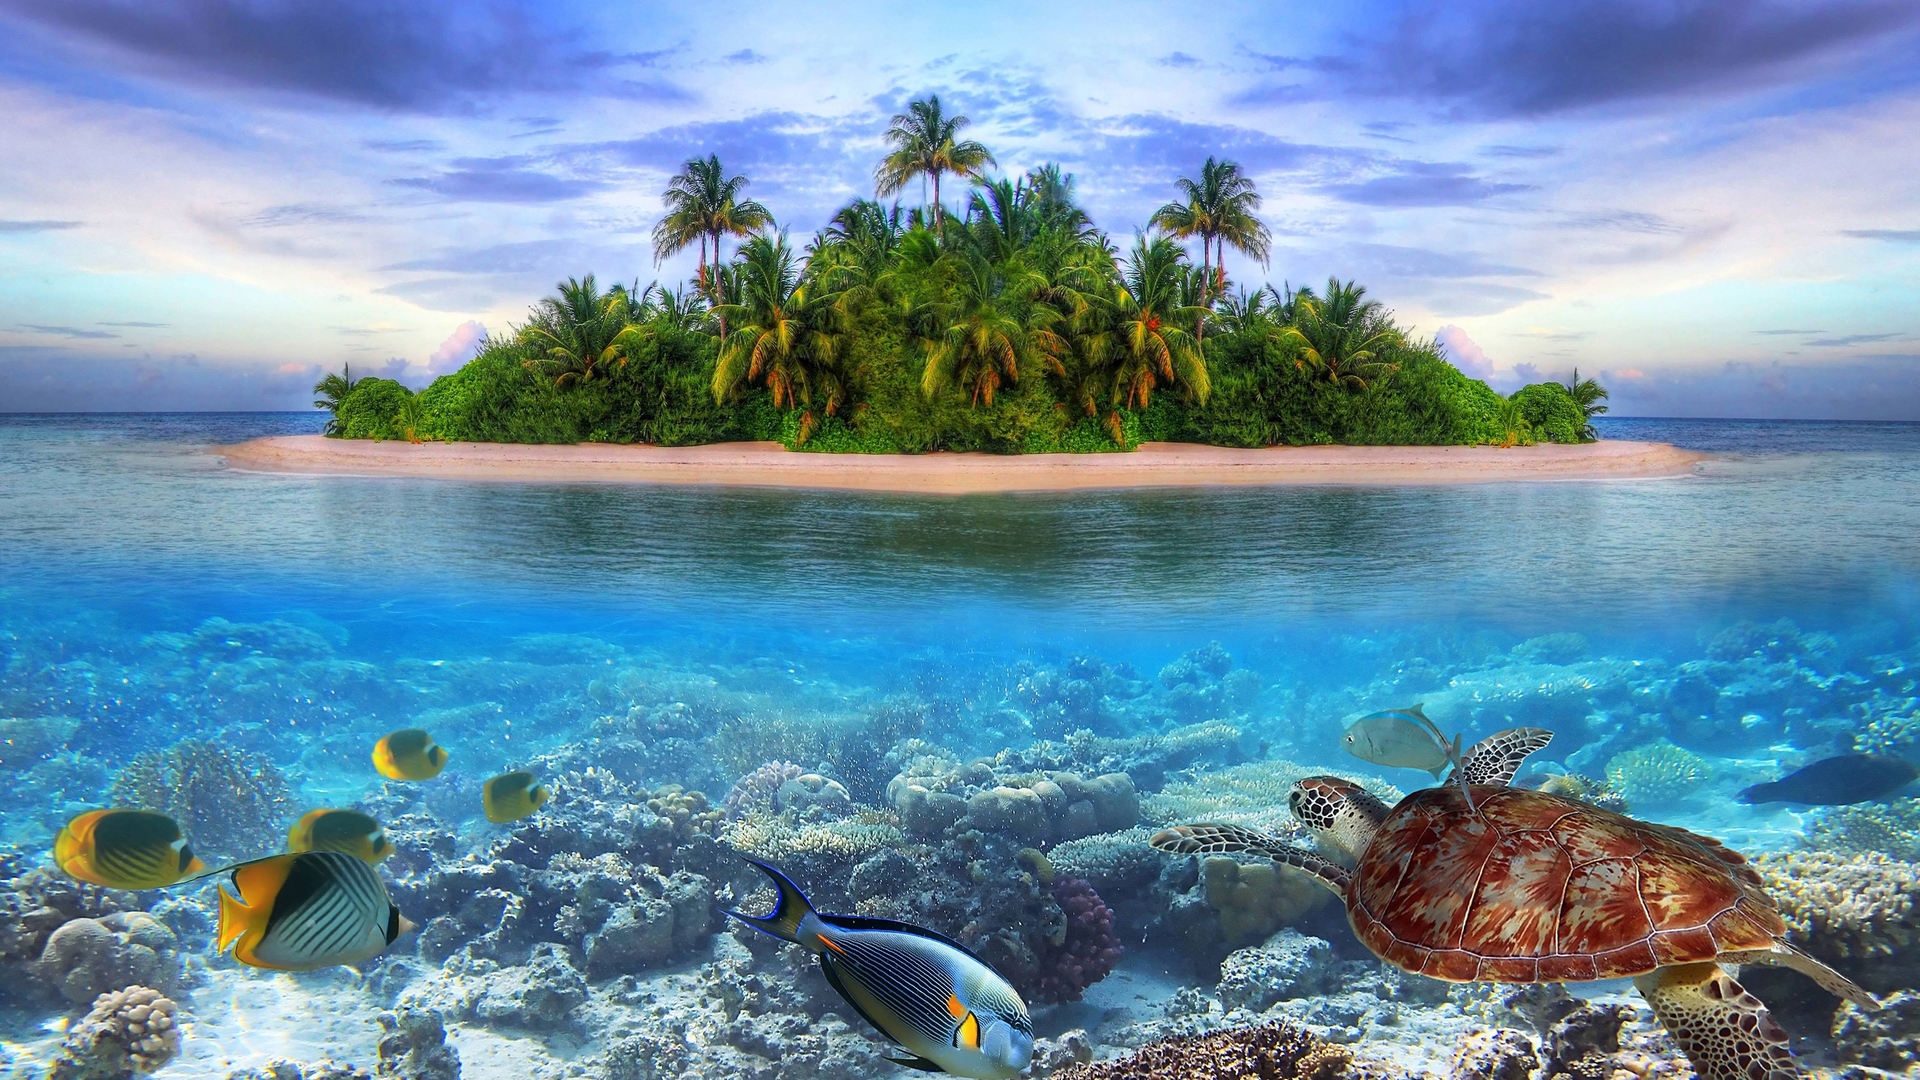 Marine Life Tropical Island 4k Ultra HD Wallpaper